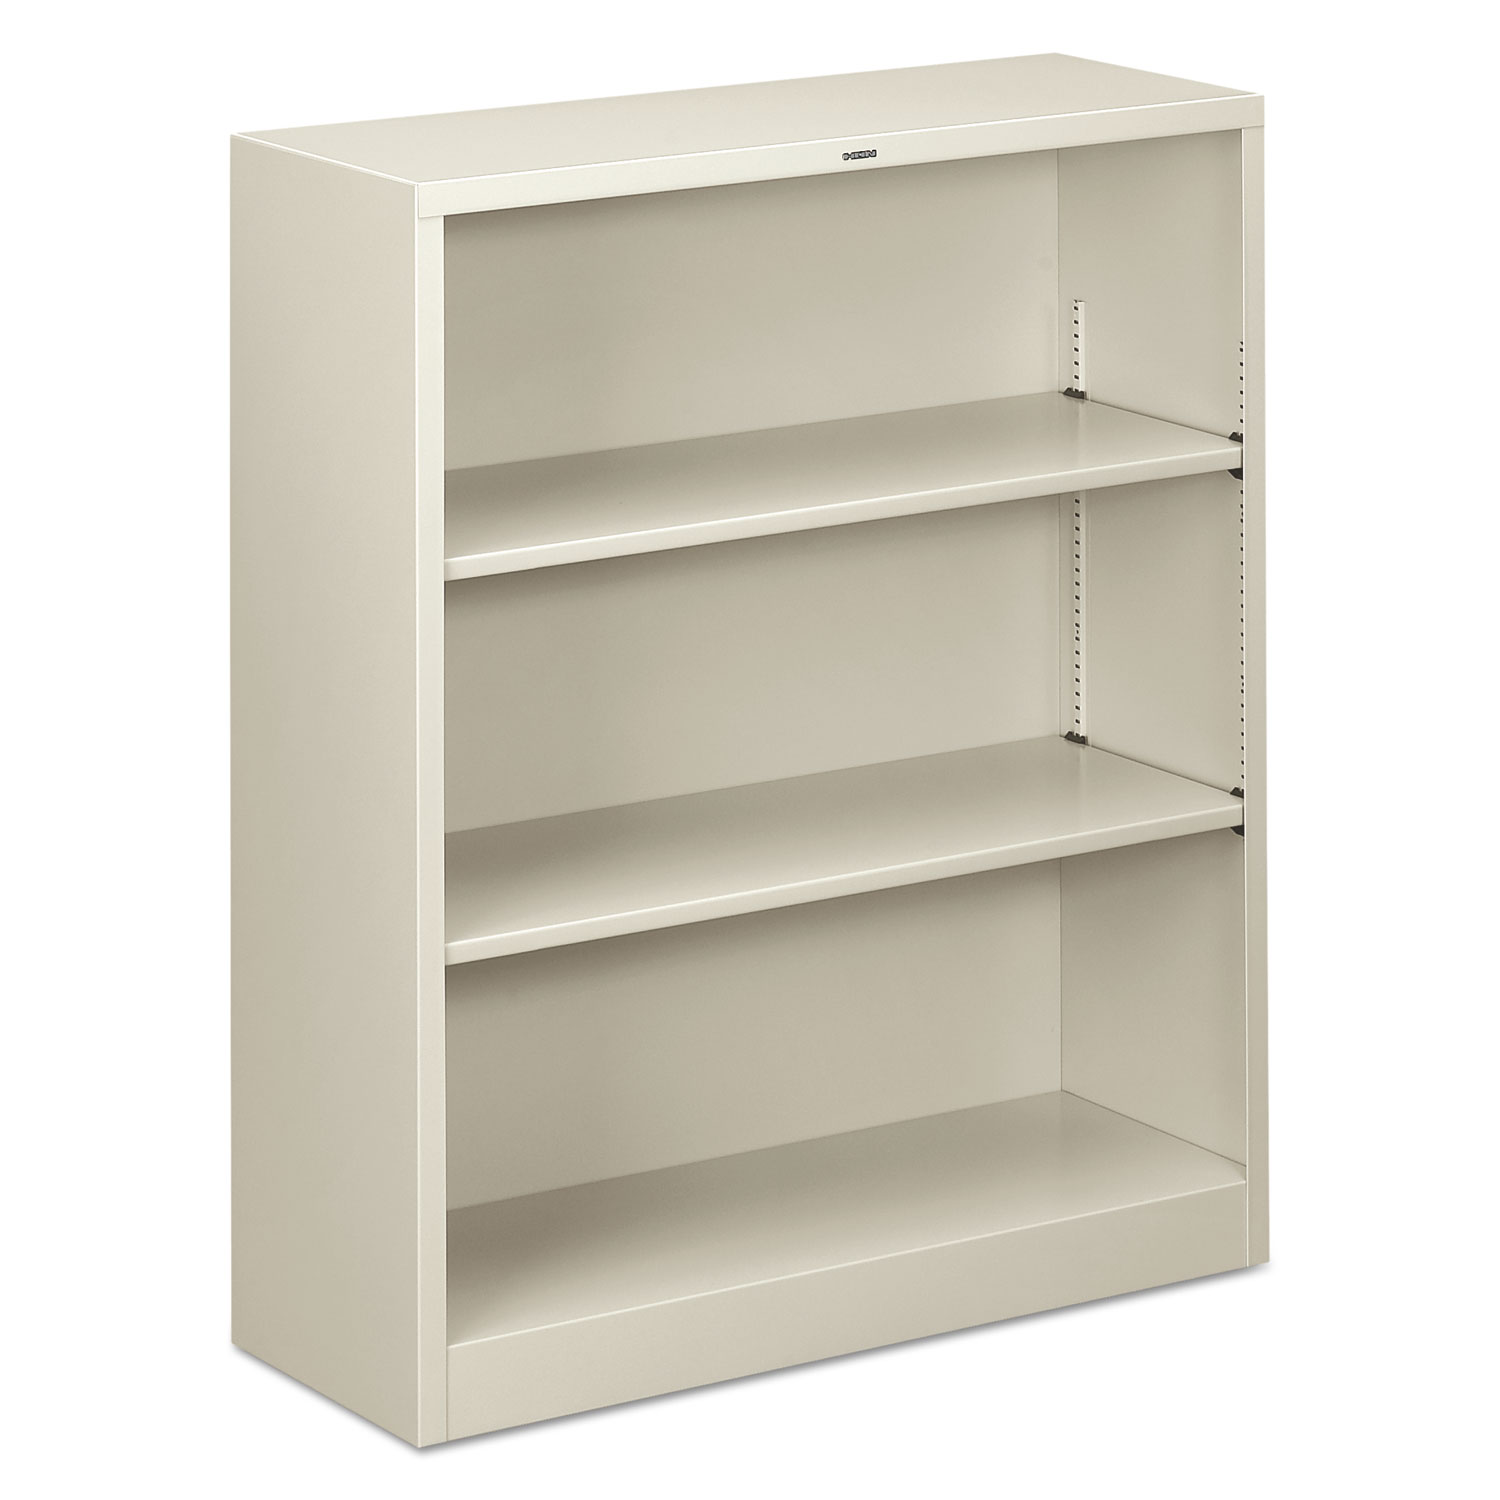  HON HS42ABC.Q Metal Bookcase, Three-Shelf, 34-1/2w x 12-5/8d x 41h, Light Gray (HONS42ABCQ) 